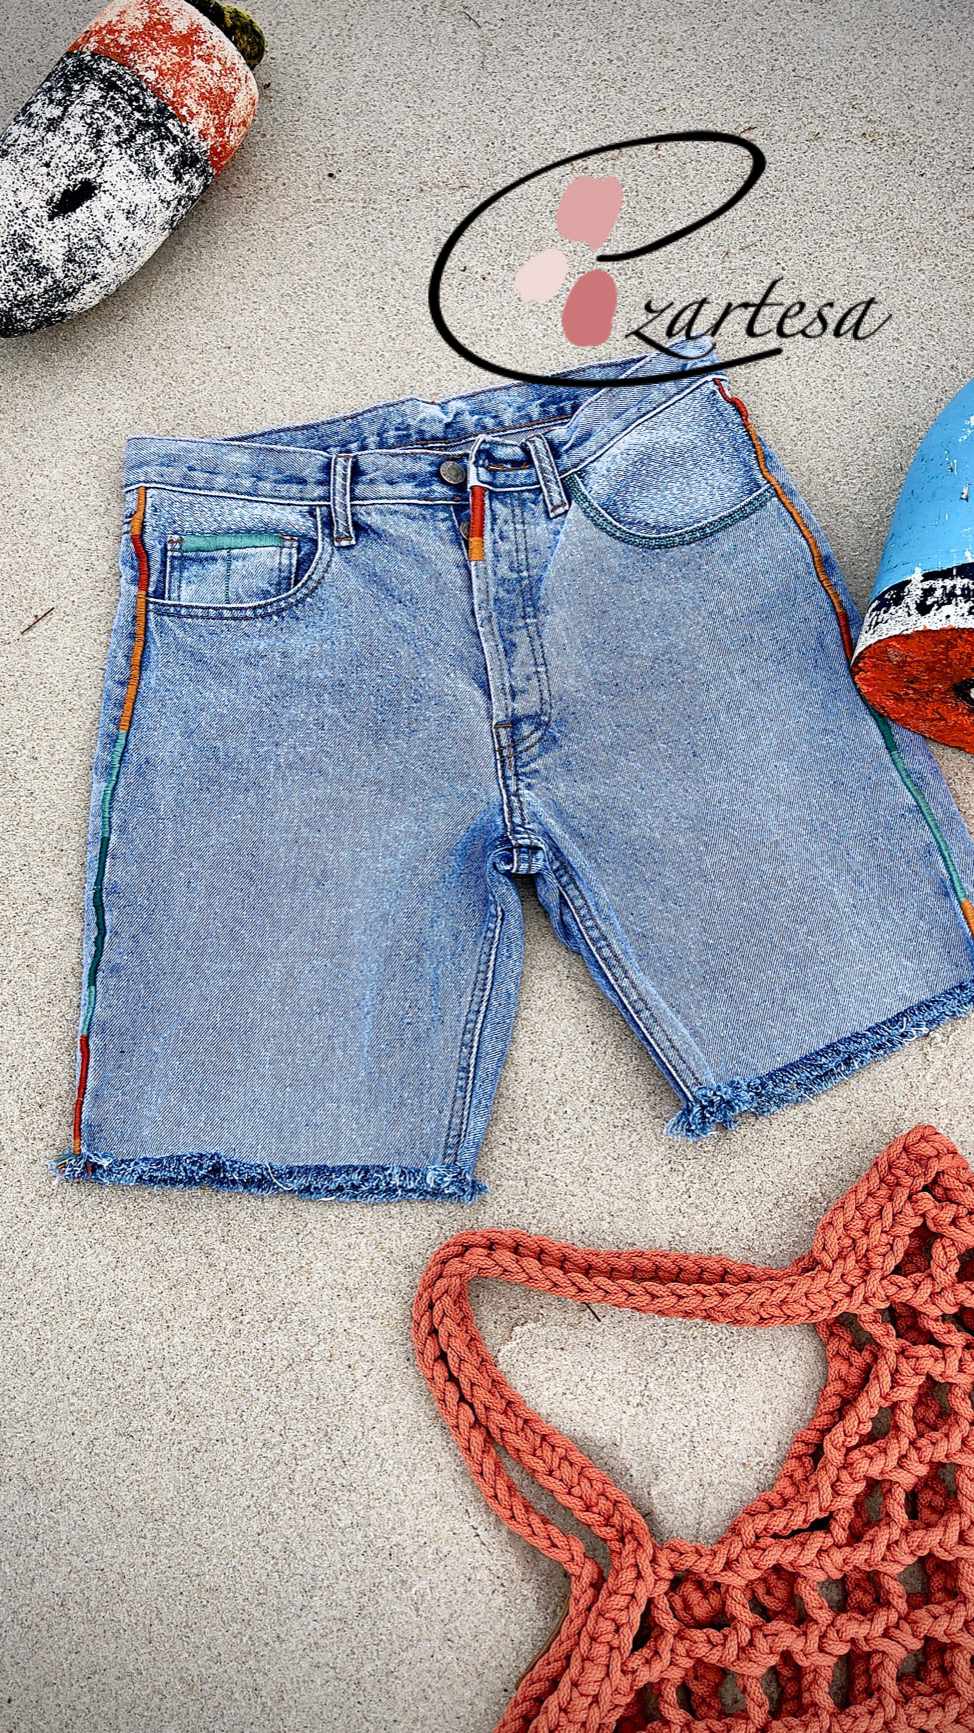 jeans-diy-seed-beads-ezartesa-design